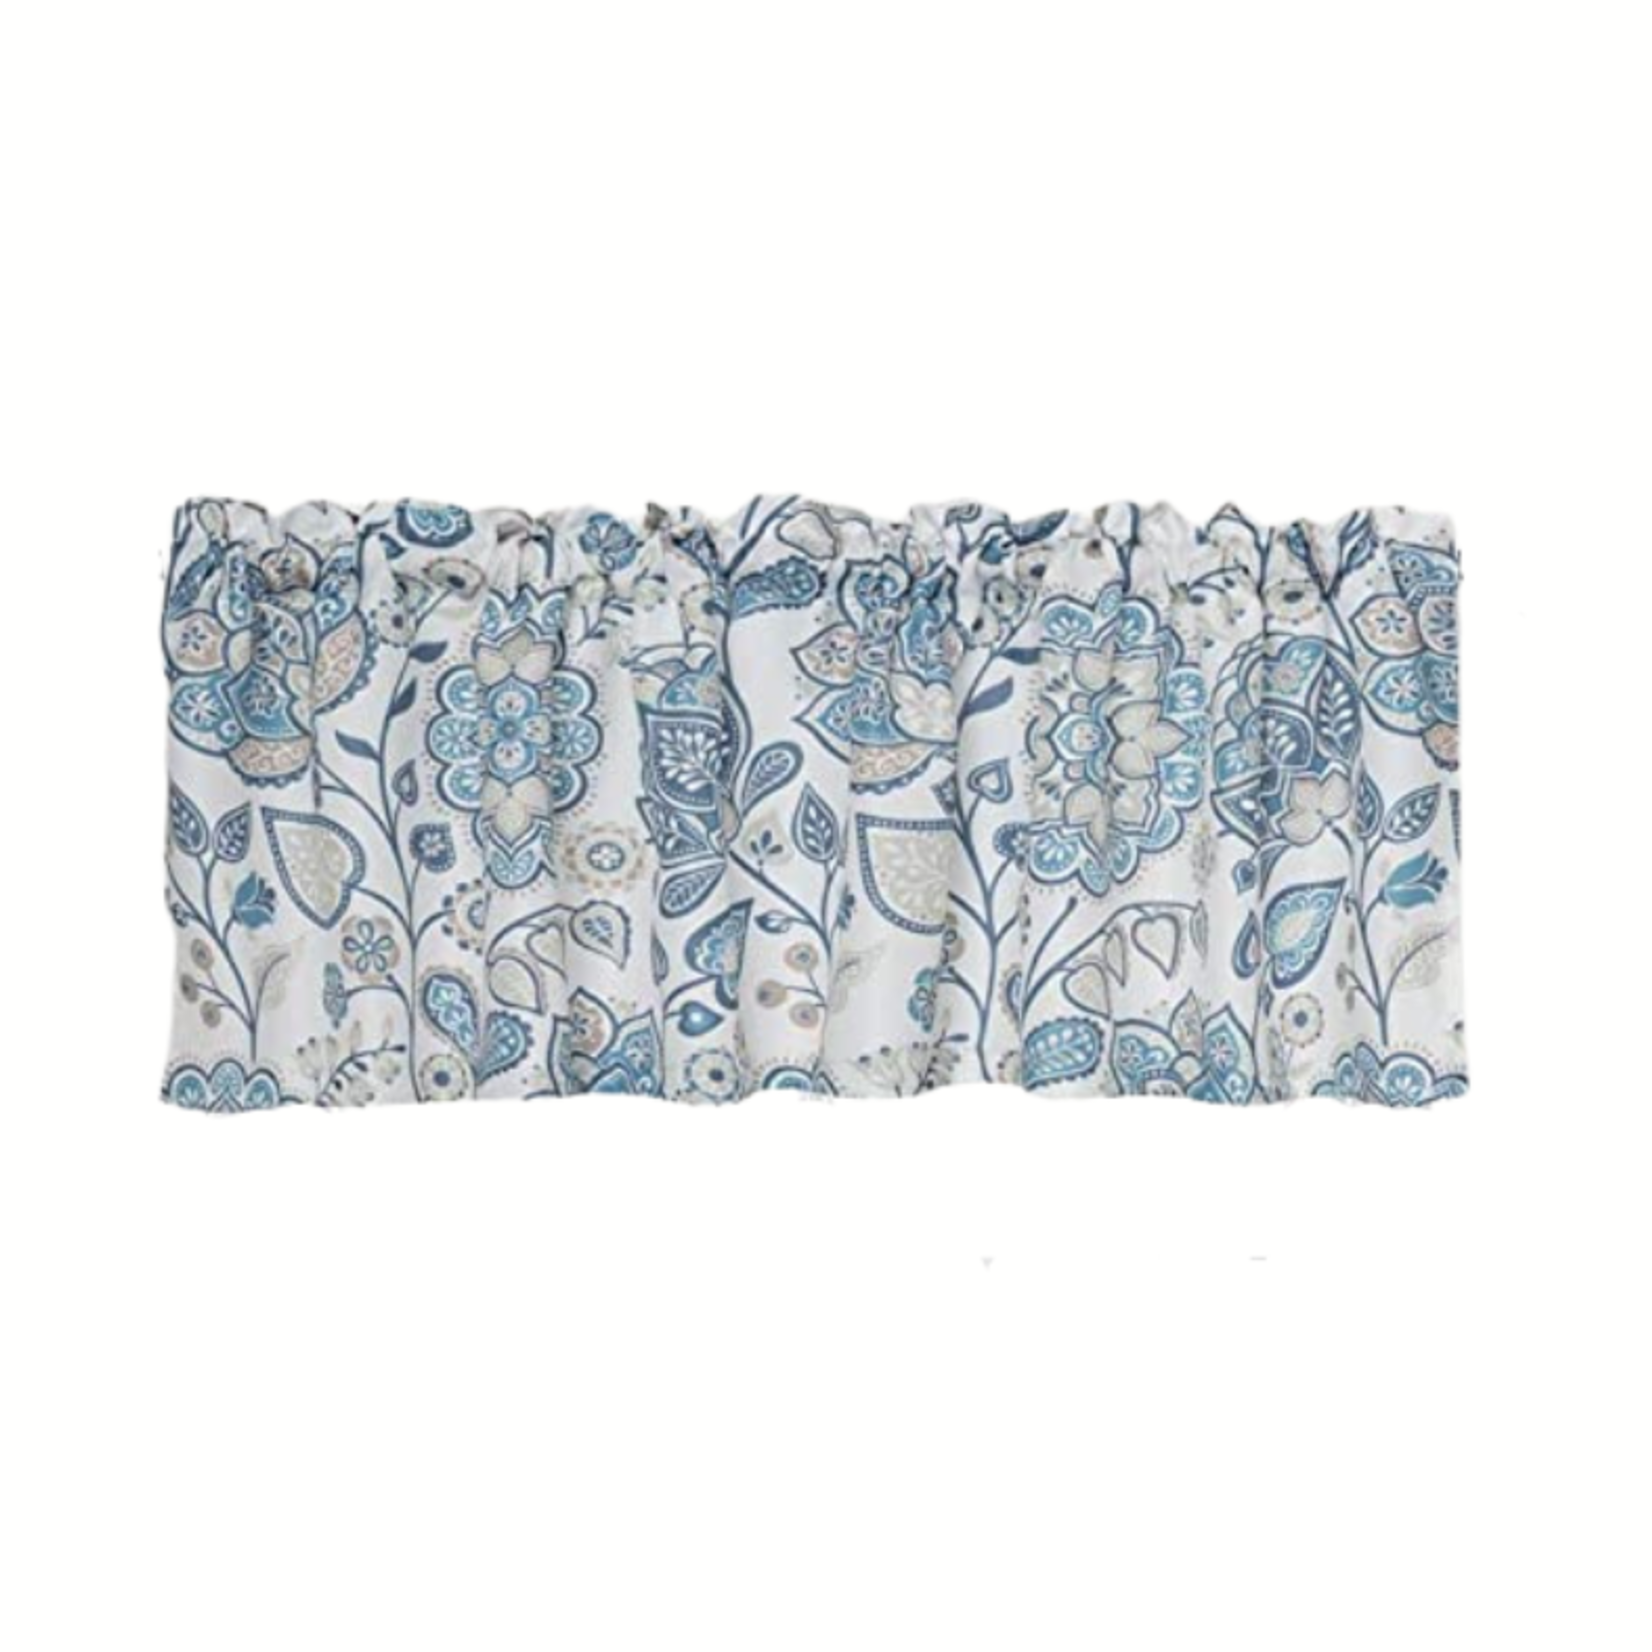 Oremila Curtain Valance- Blue Floral